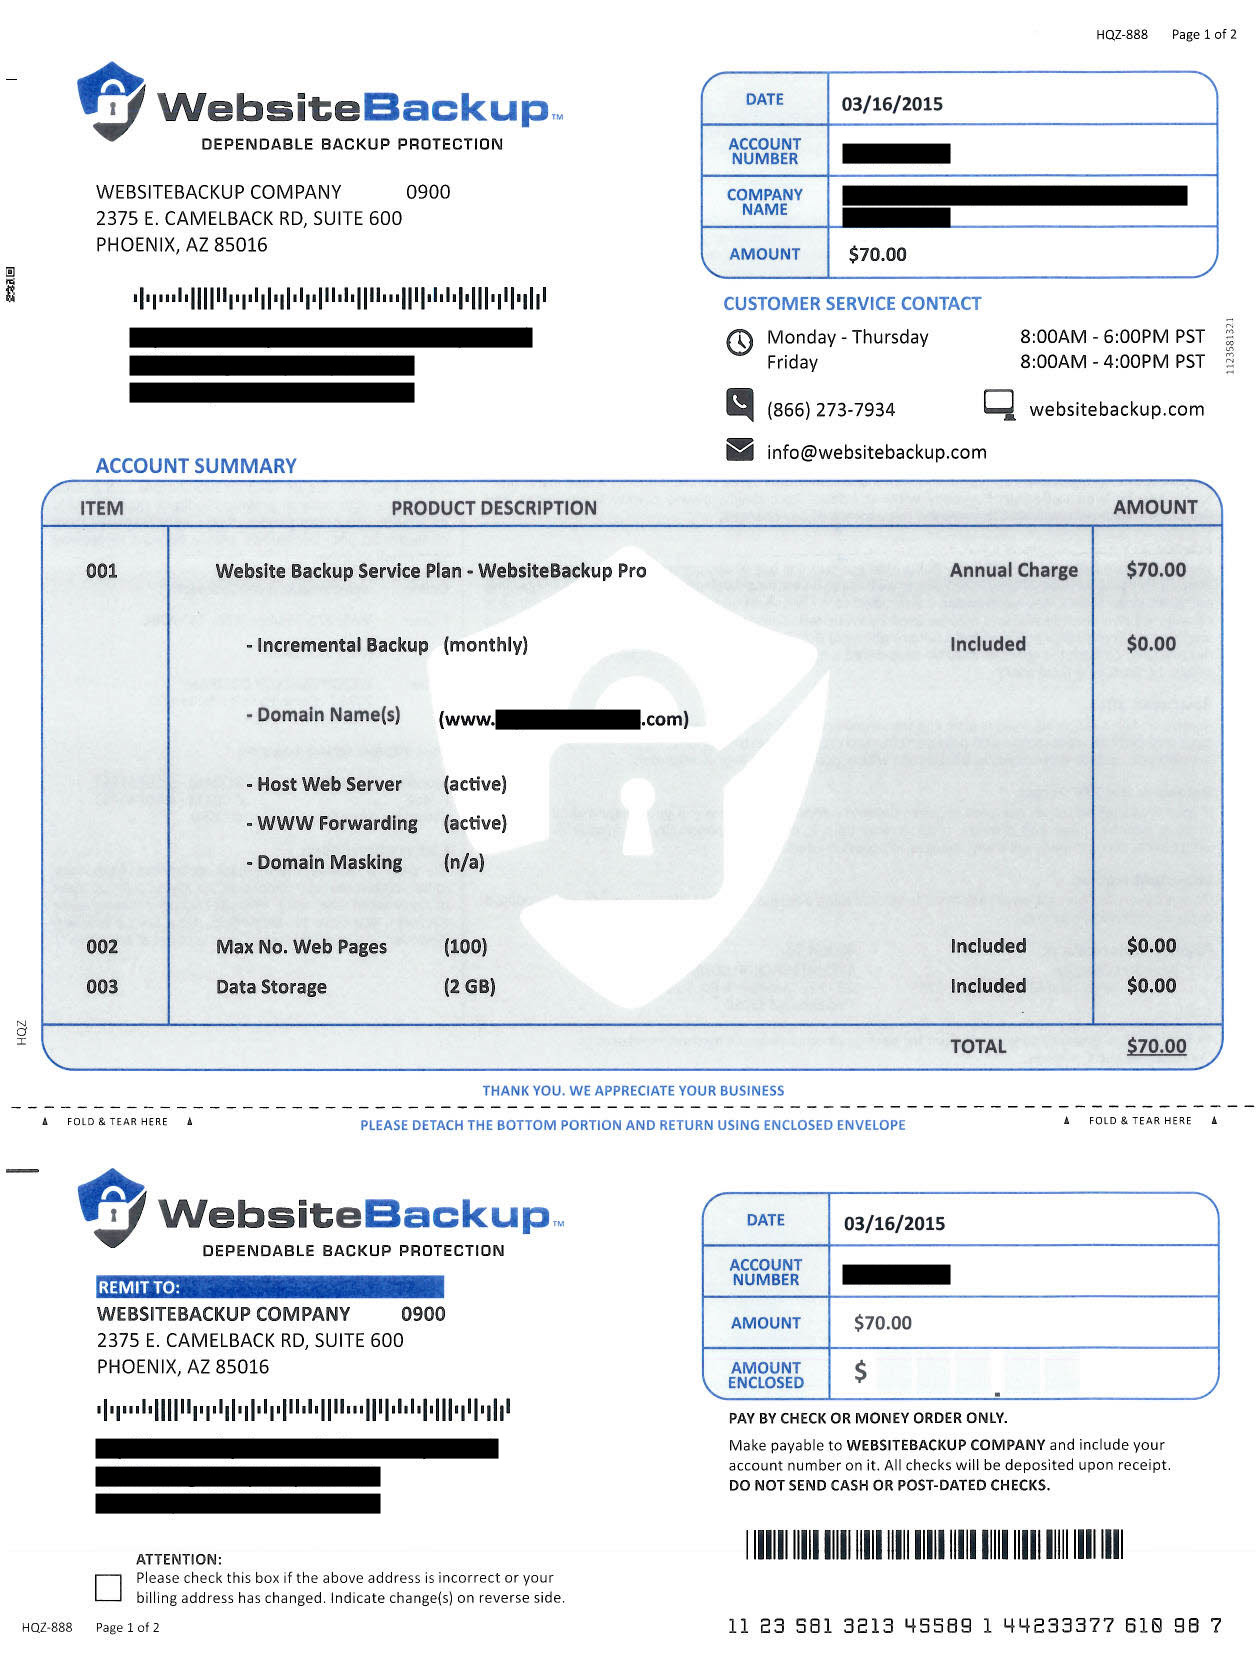 Website Backup Invoice Scam